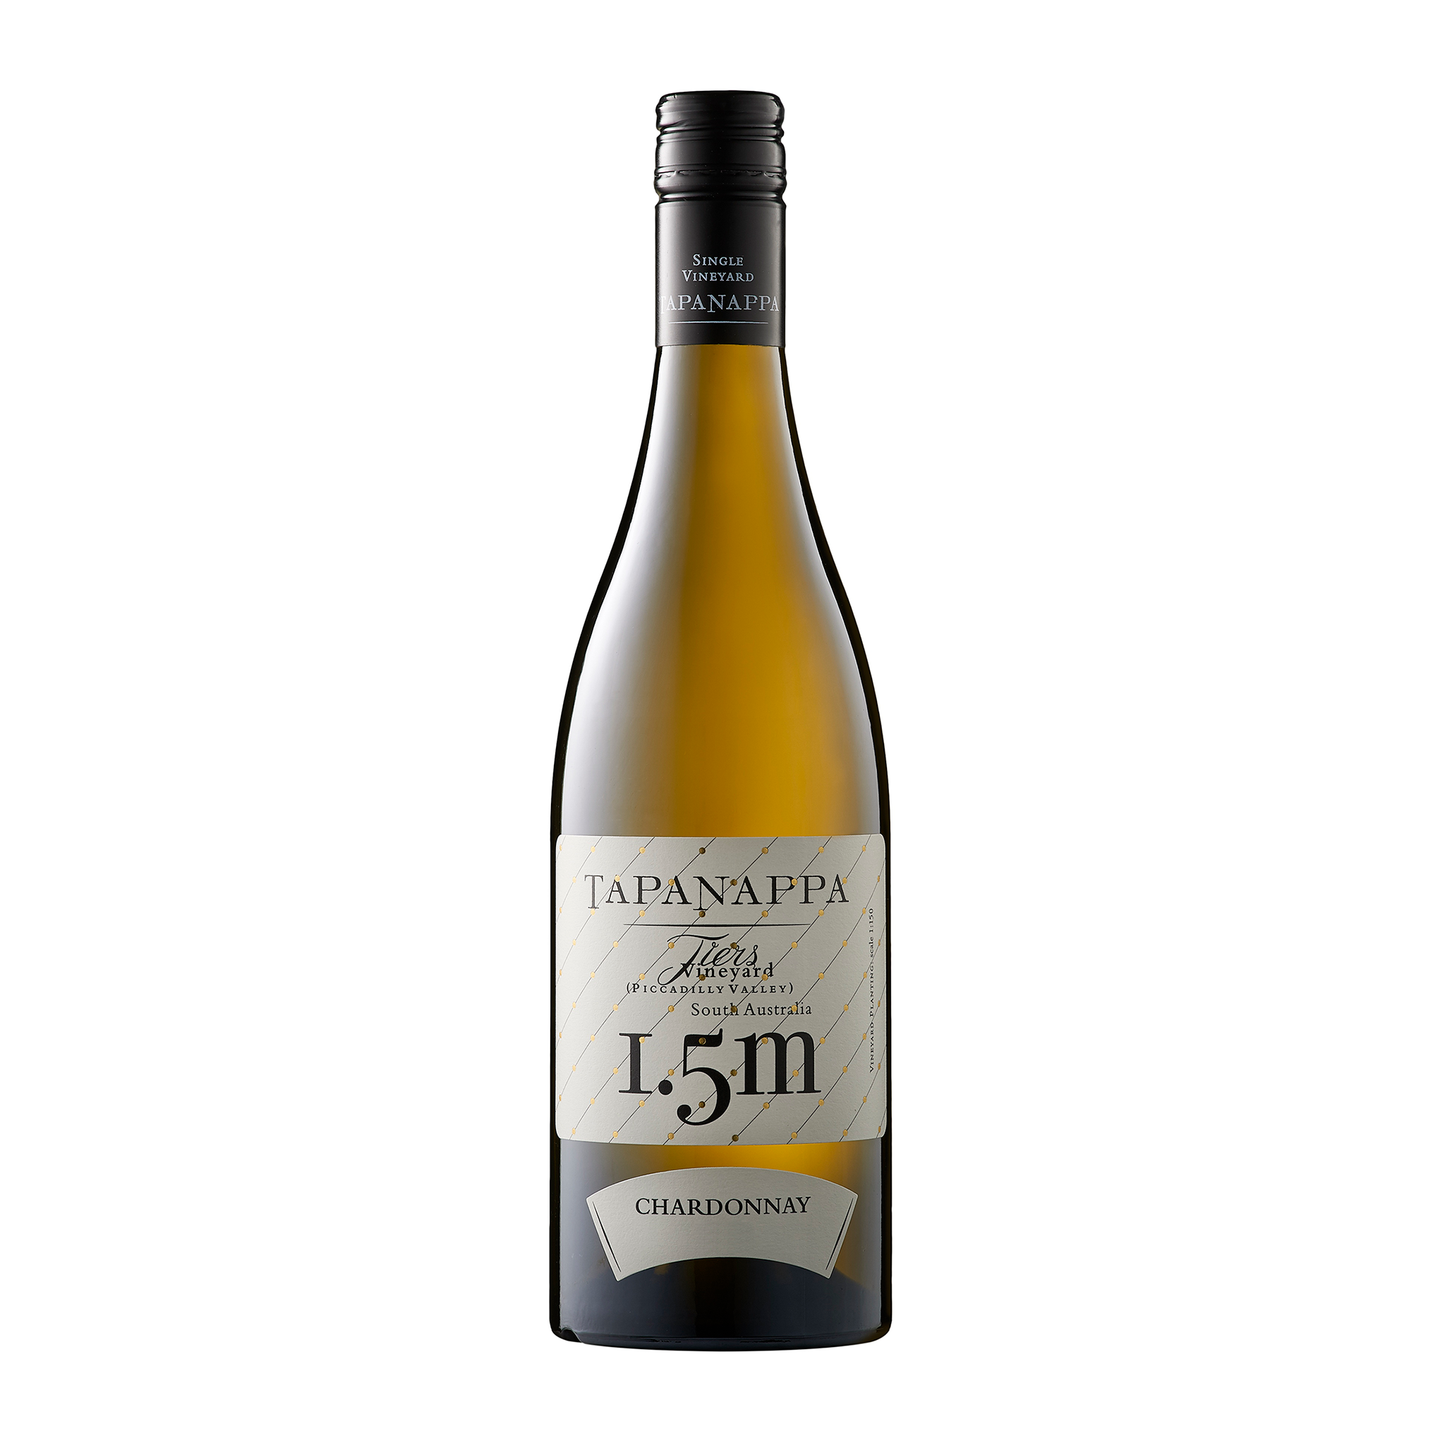 Tapanappa Tiers Vineyard 1.5m Chardonnay 2022